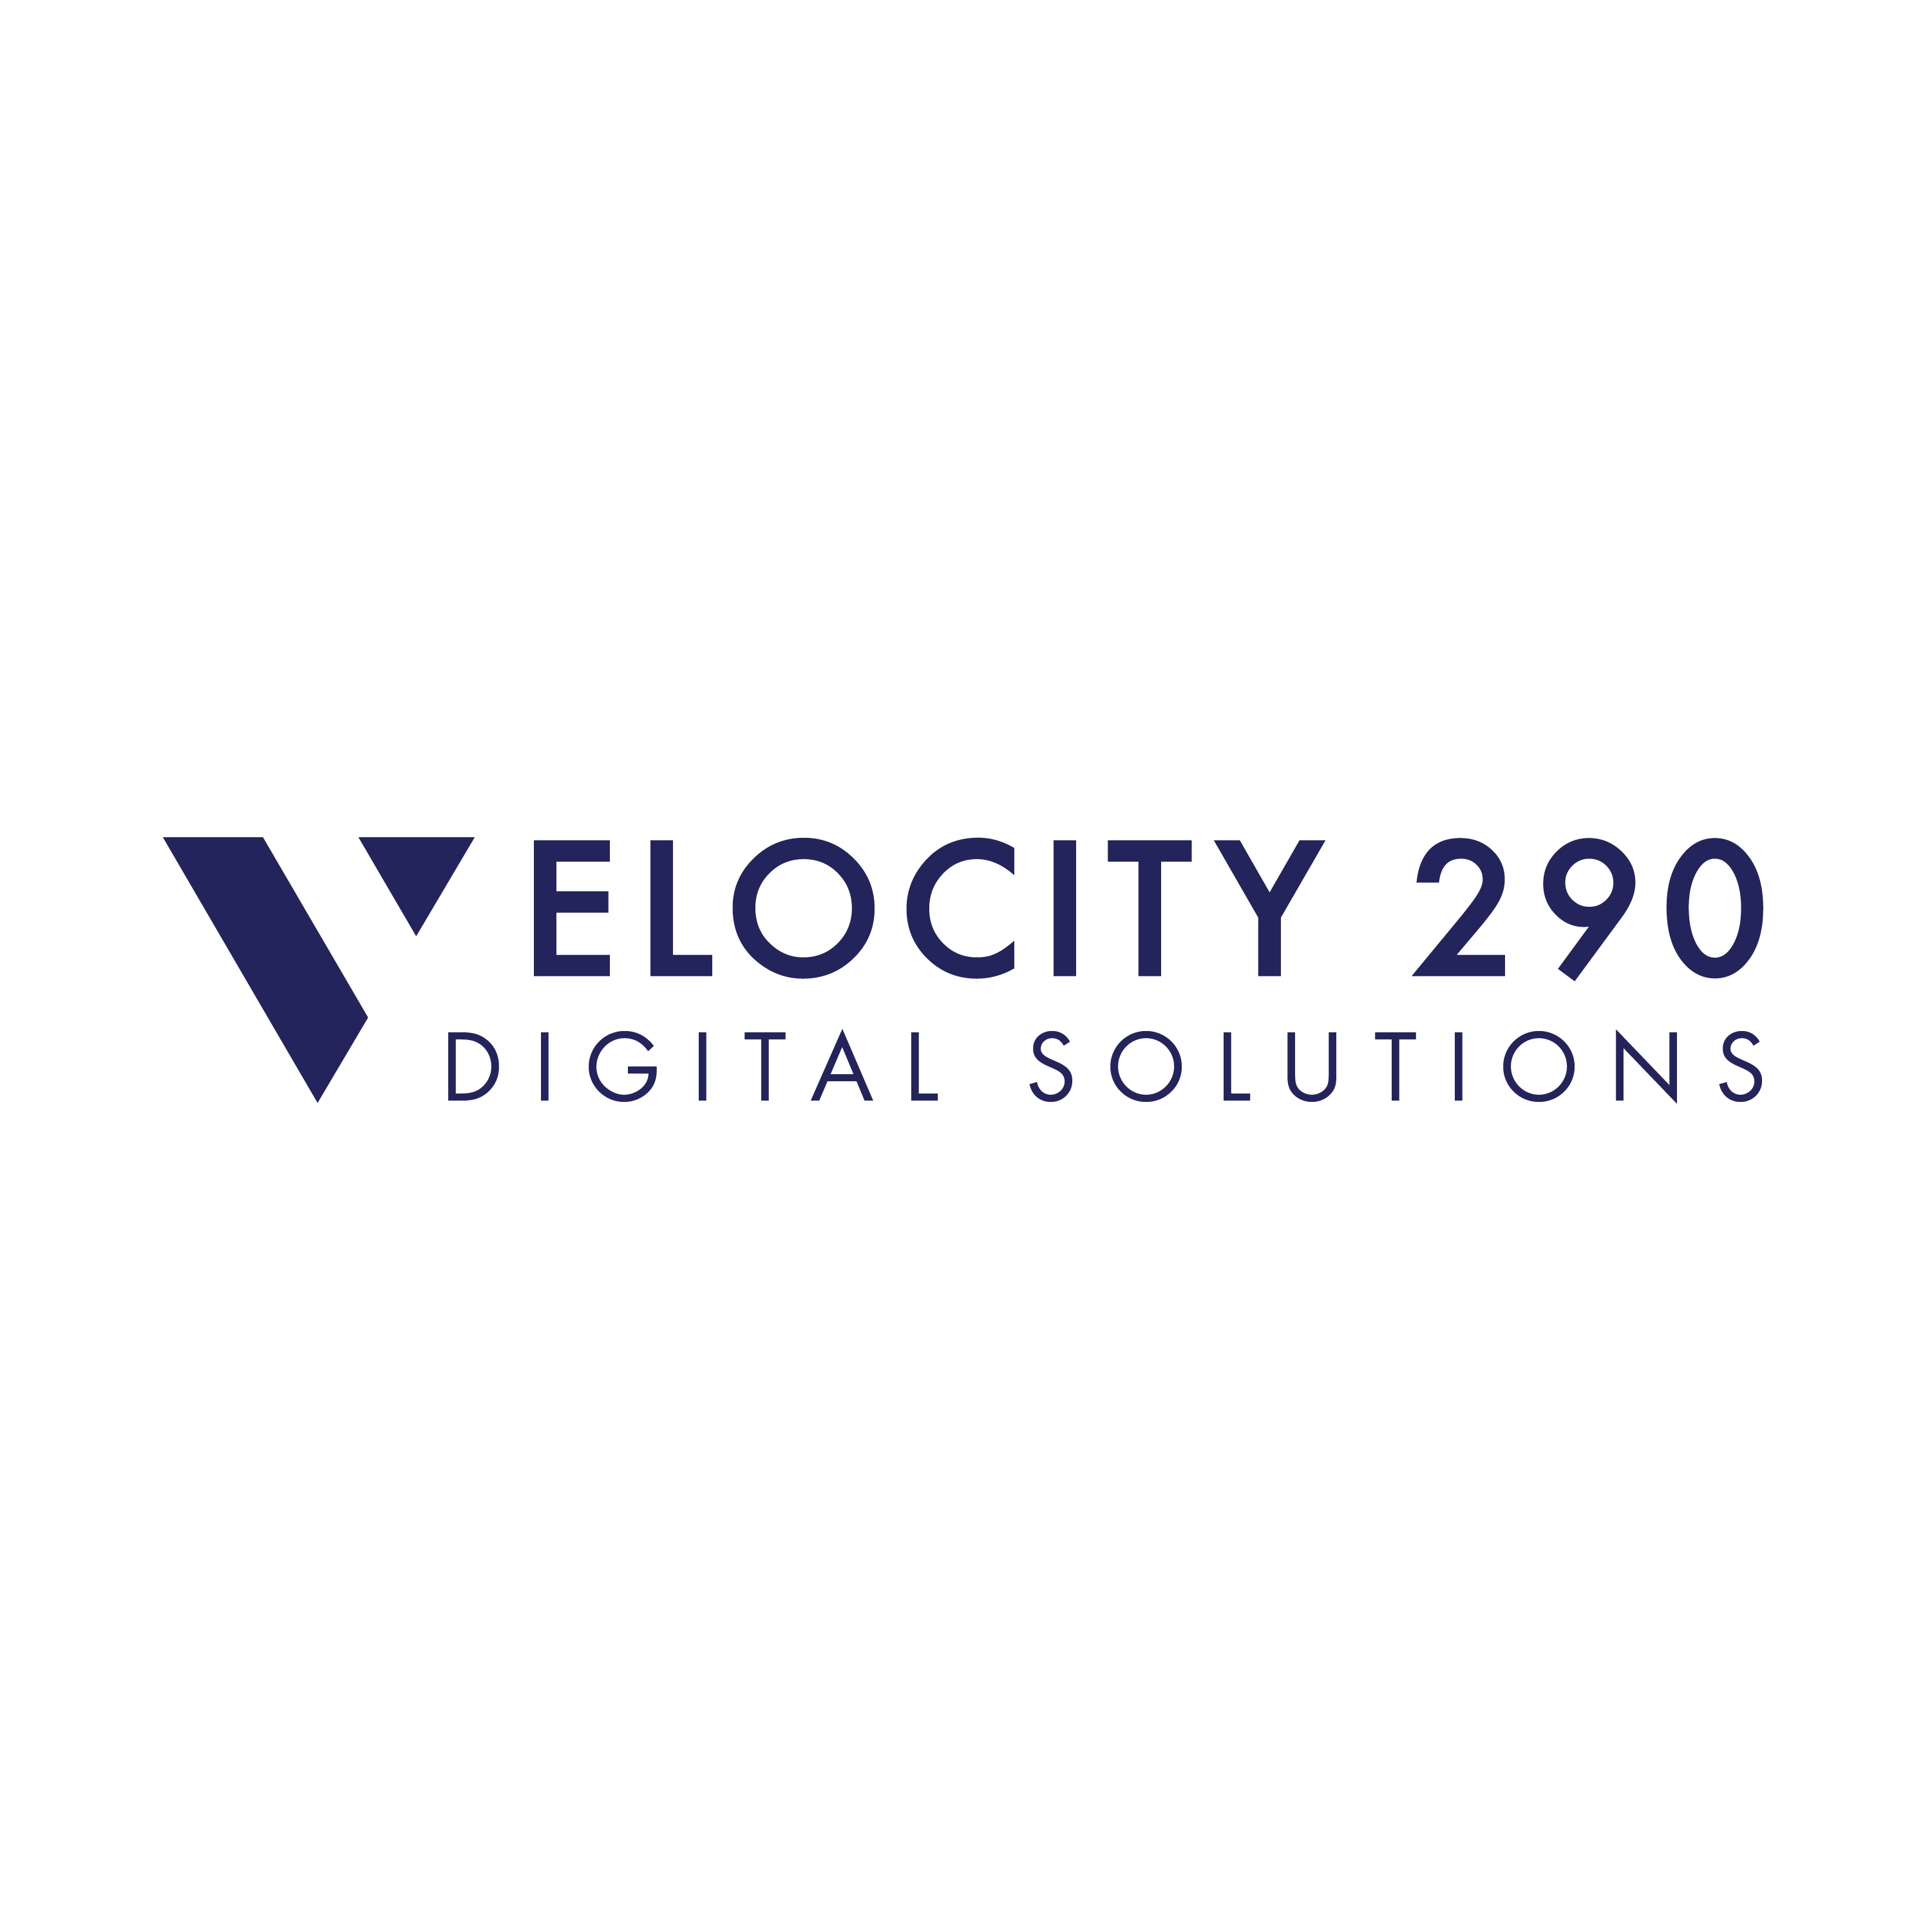 Velocity 290 Digital Solutions